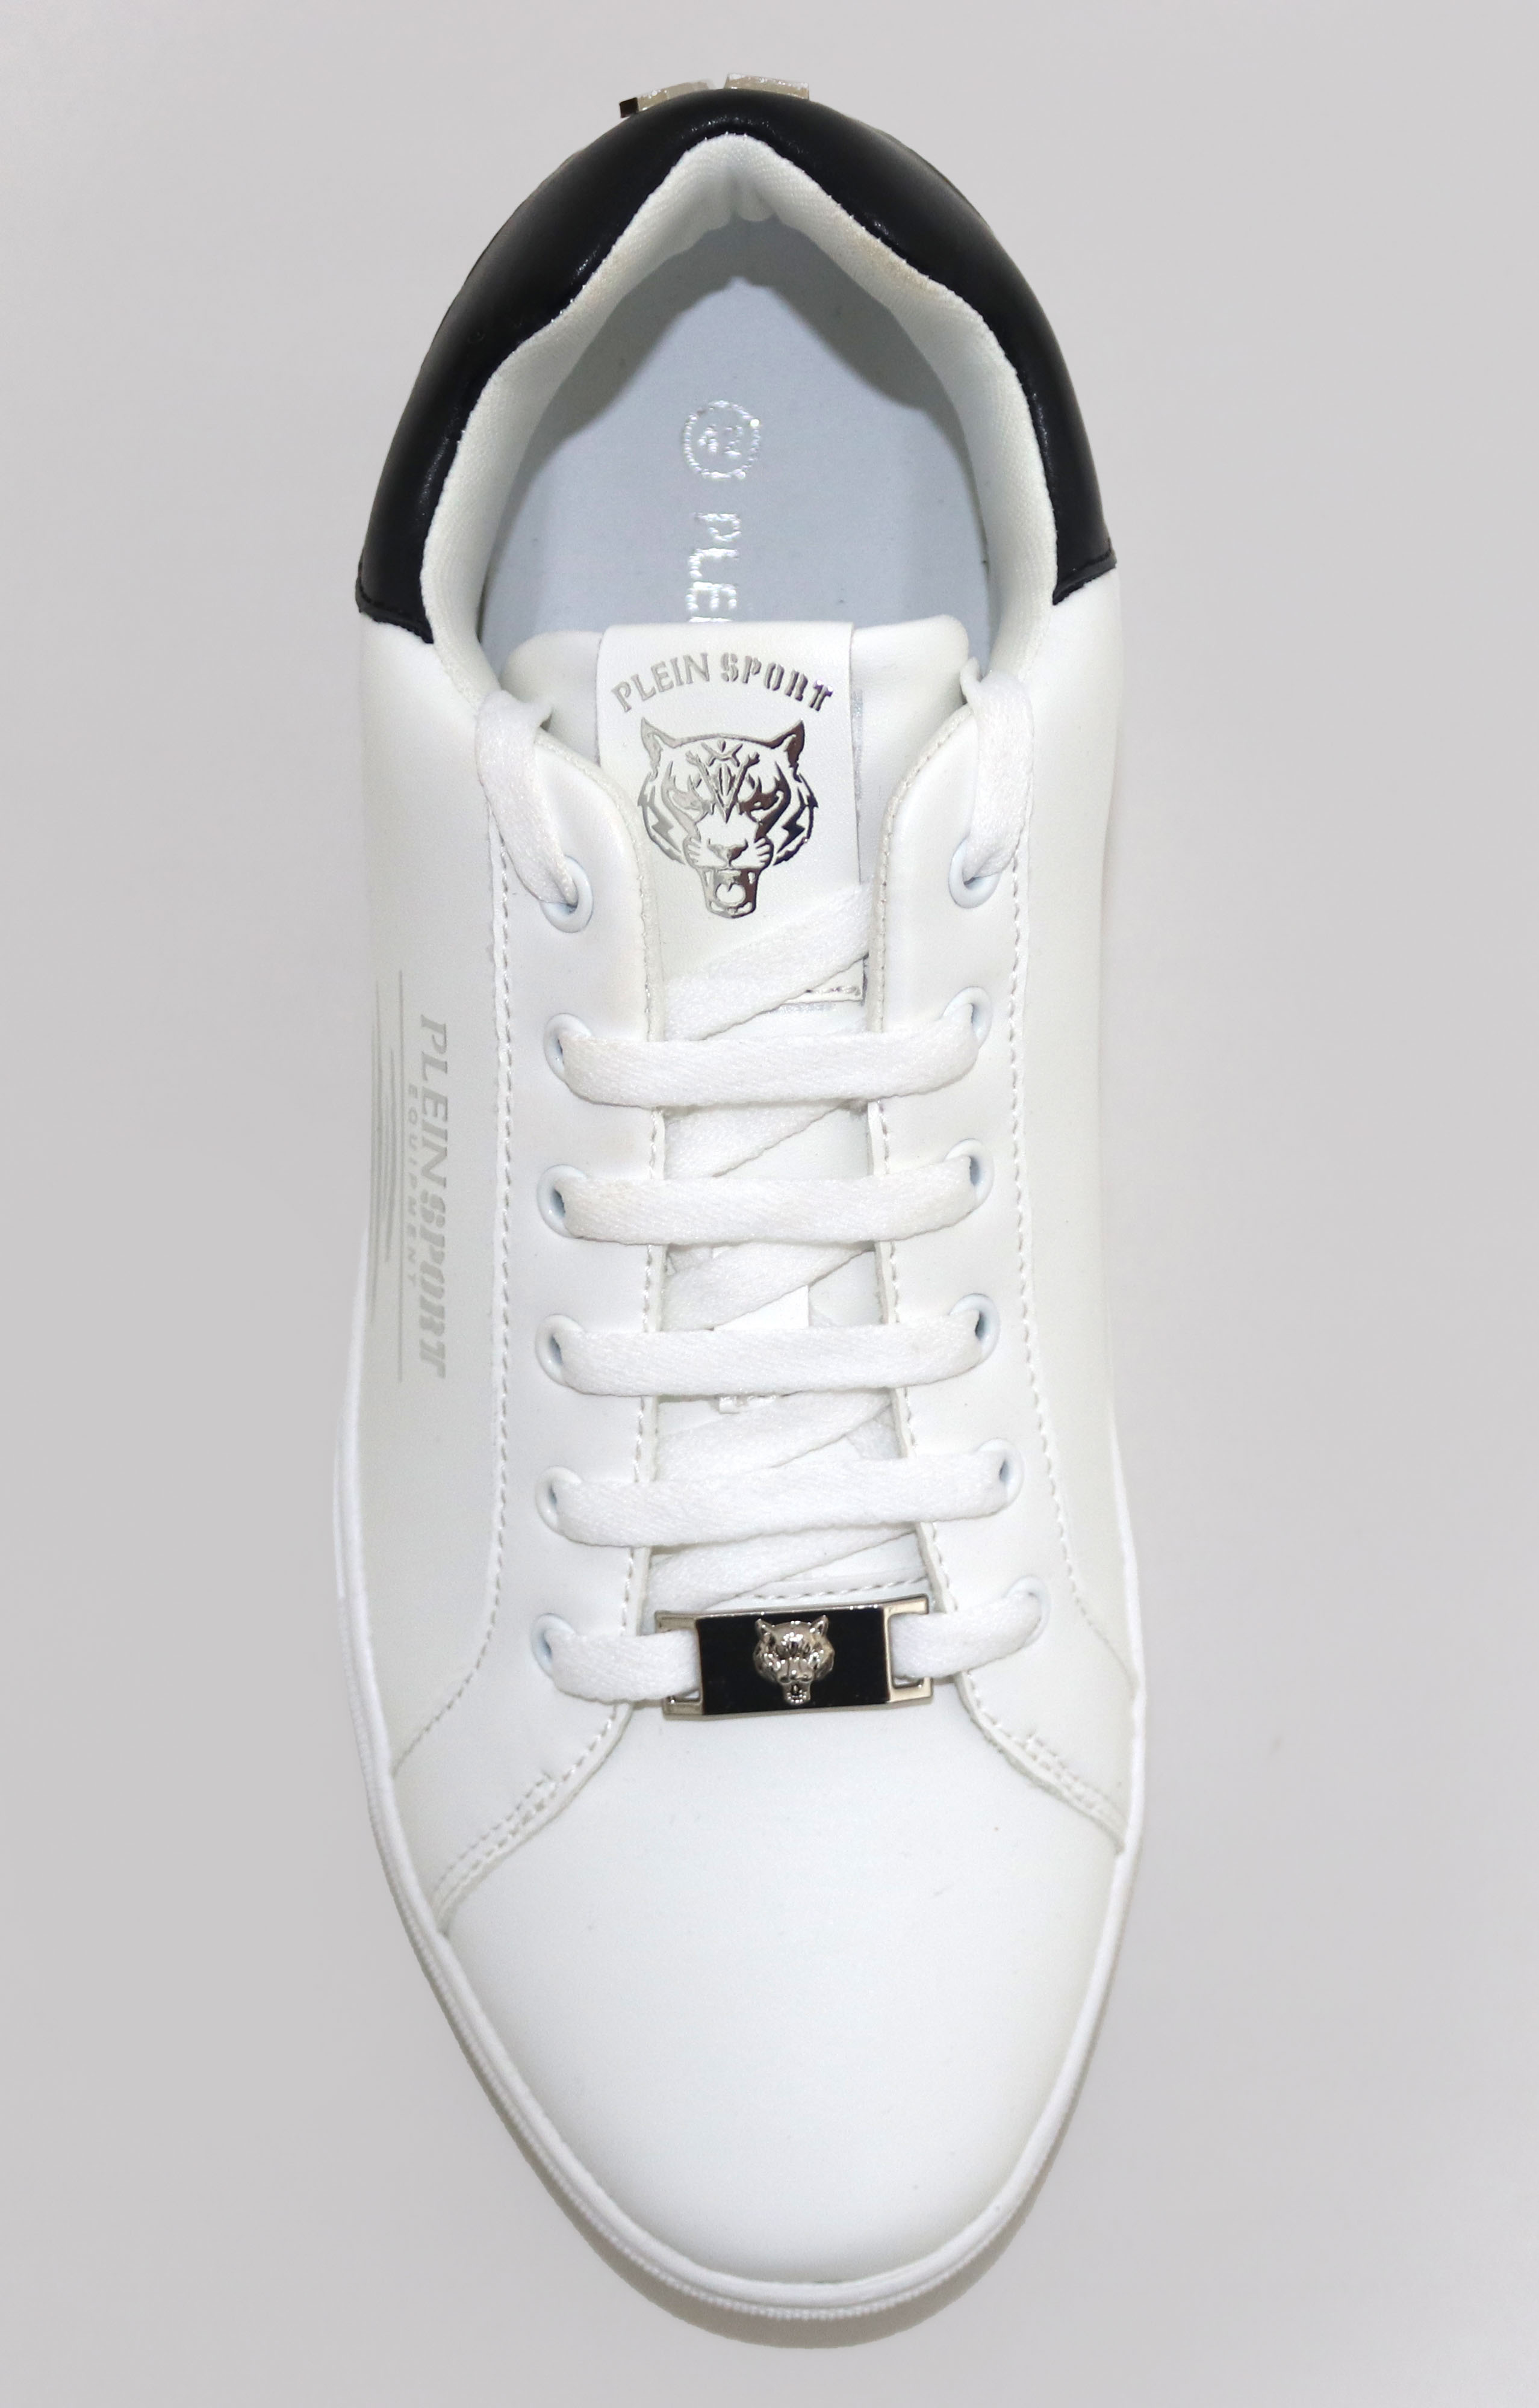 Plein Sport White Sneakers for Men - SIPS93201